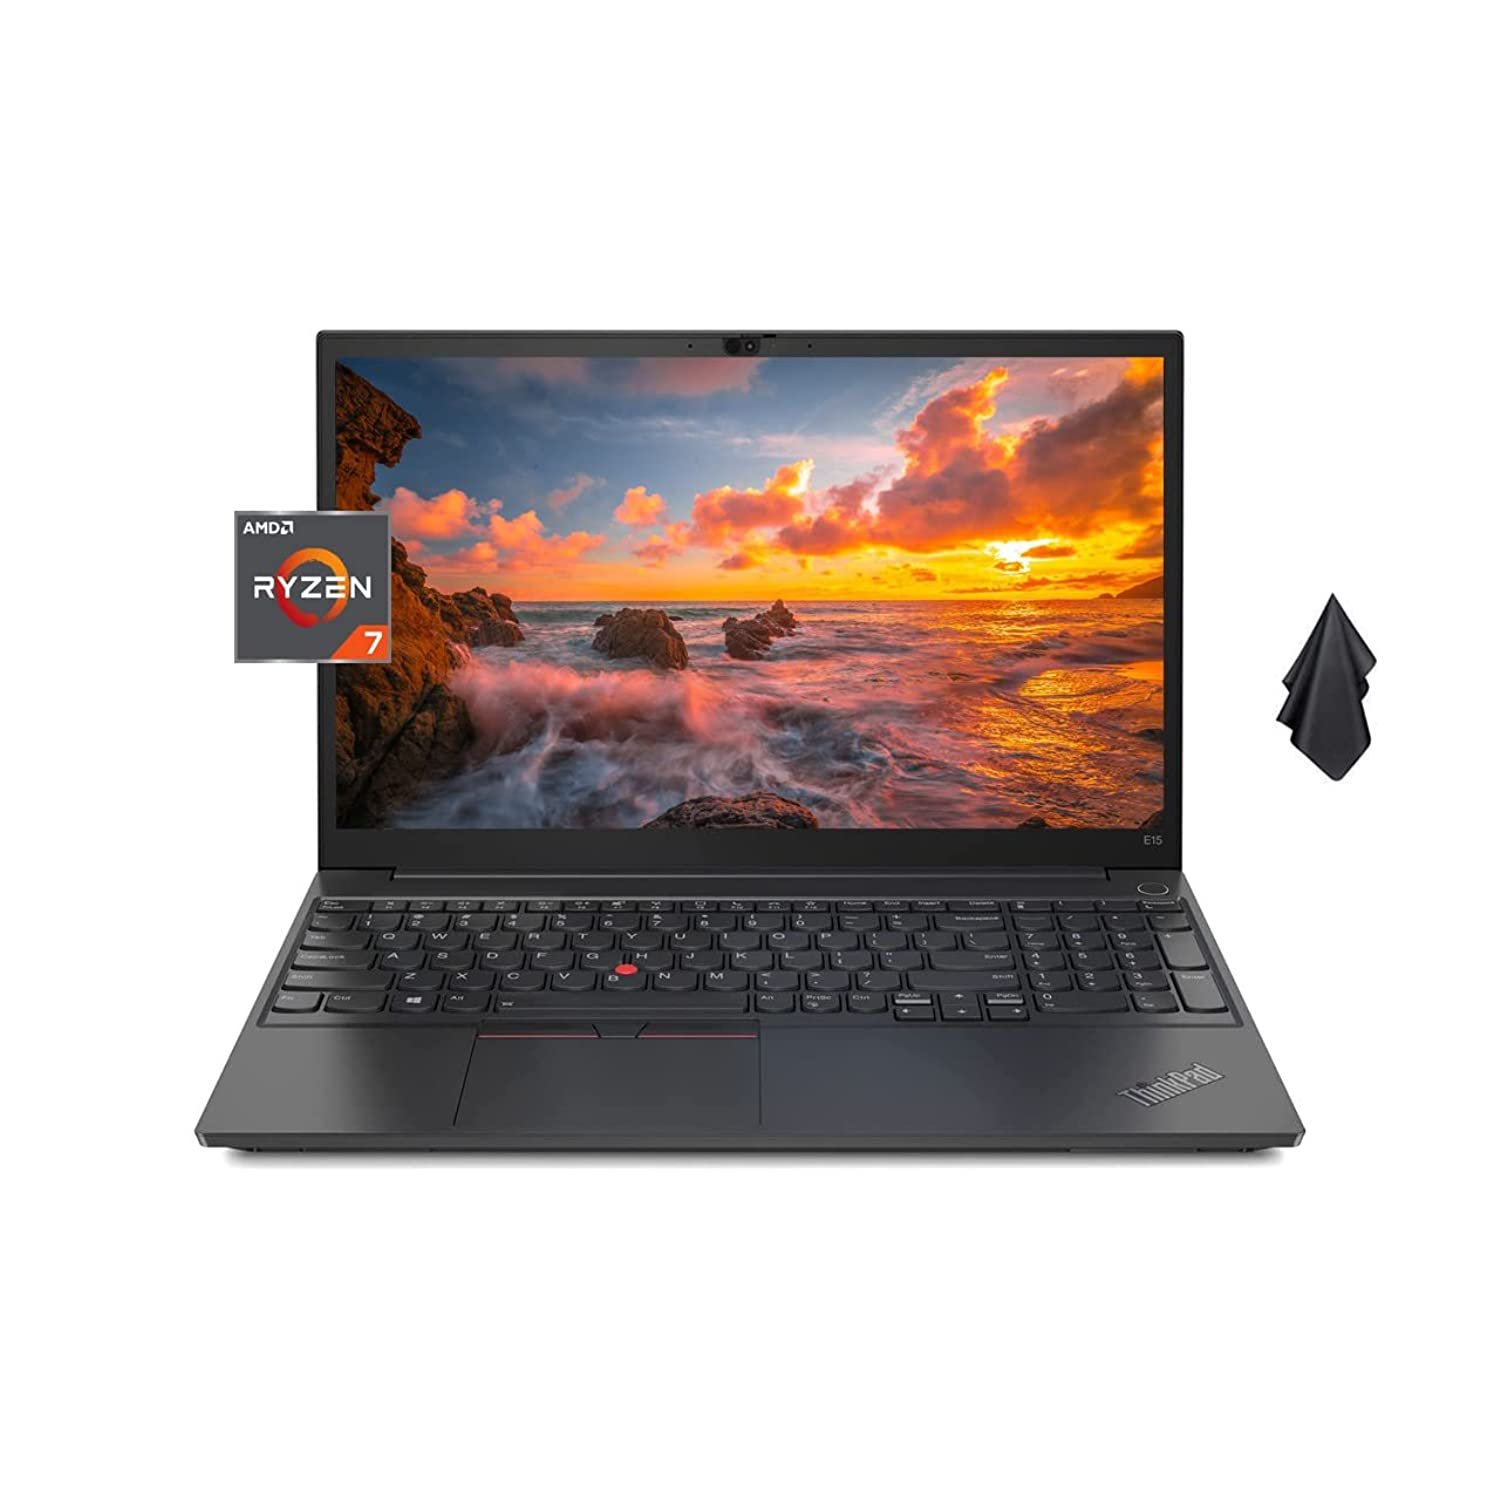 Lenovo ThinkPad E15 Business Laptop, 15.6"" FHD IPS Anti-Glare Display, AMD Ryzen 7 5700U(B